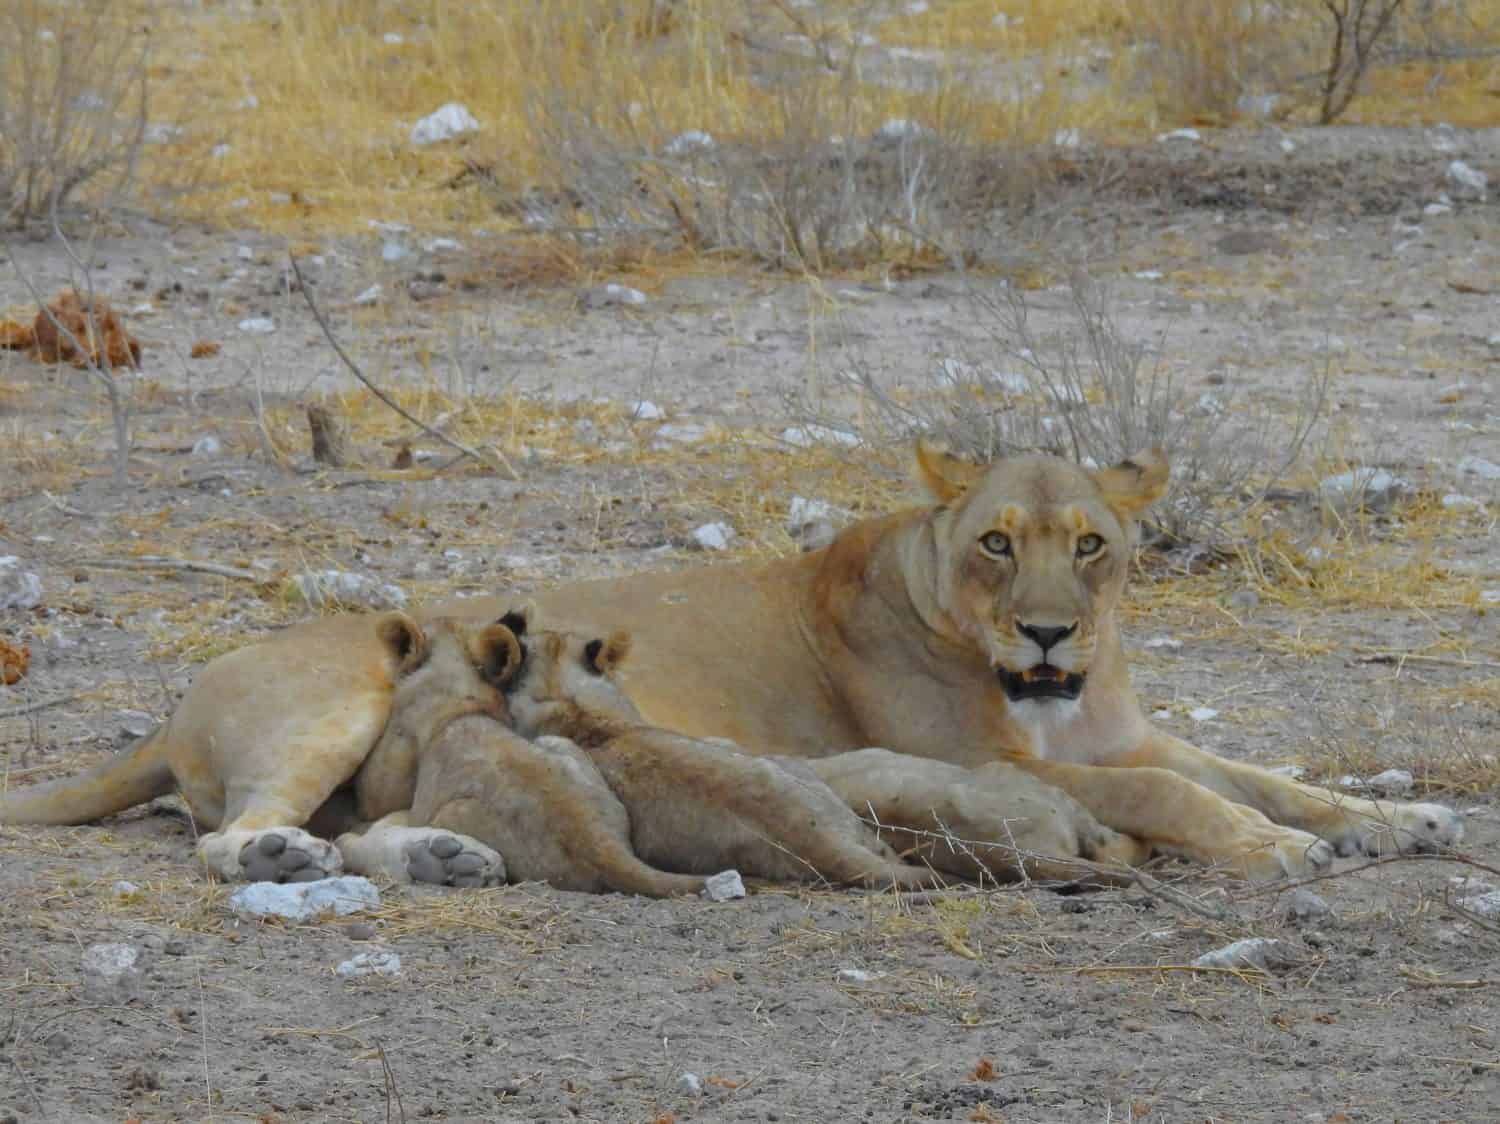 Cubs suckling in Etosha, Namibia